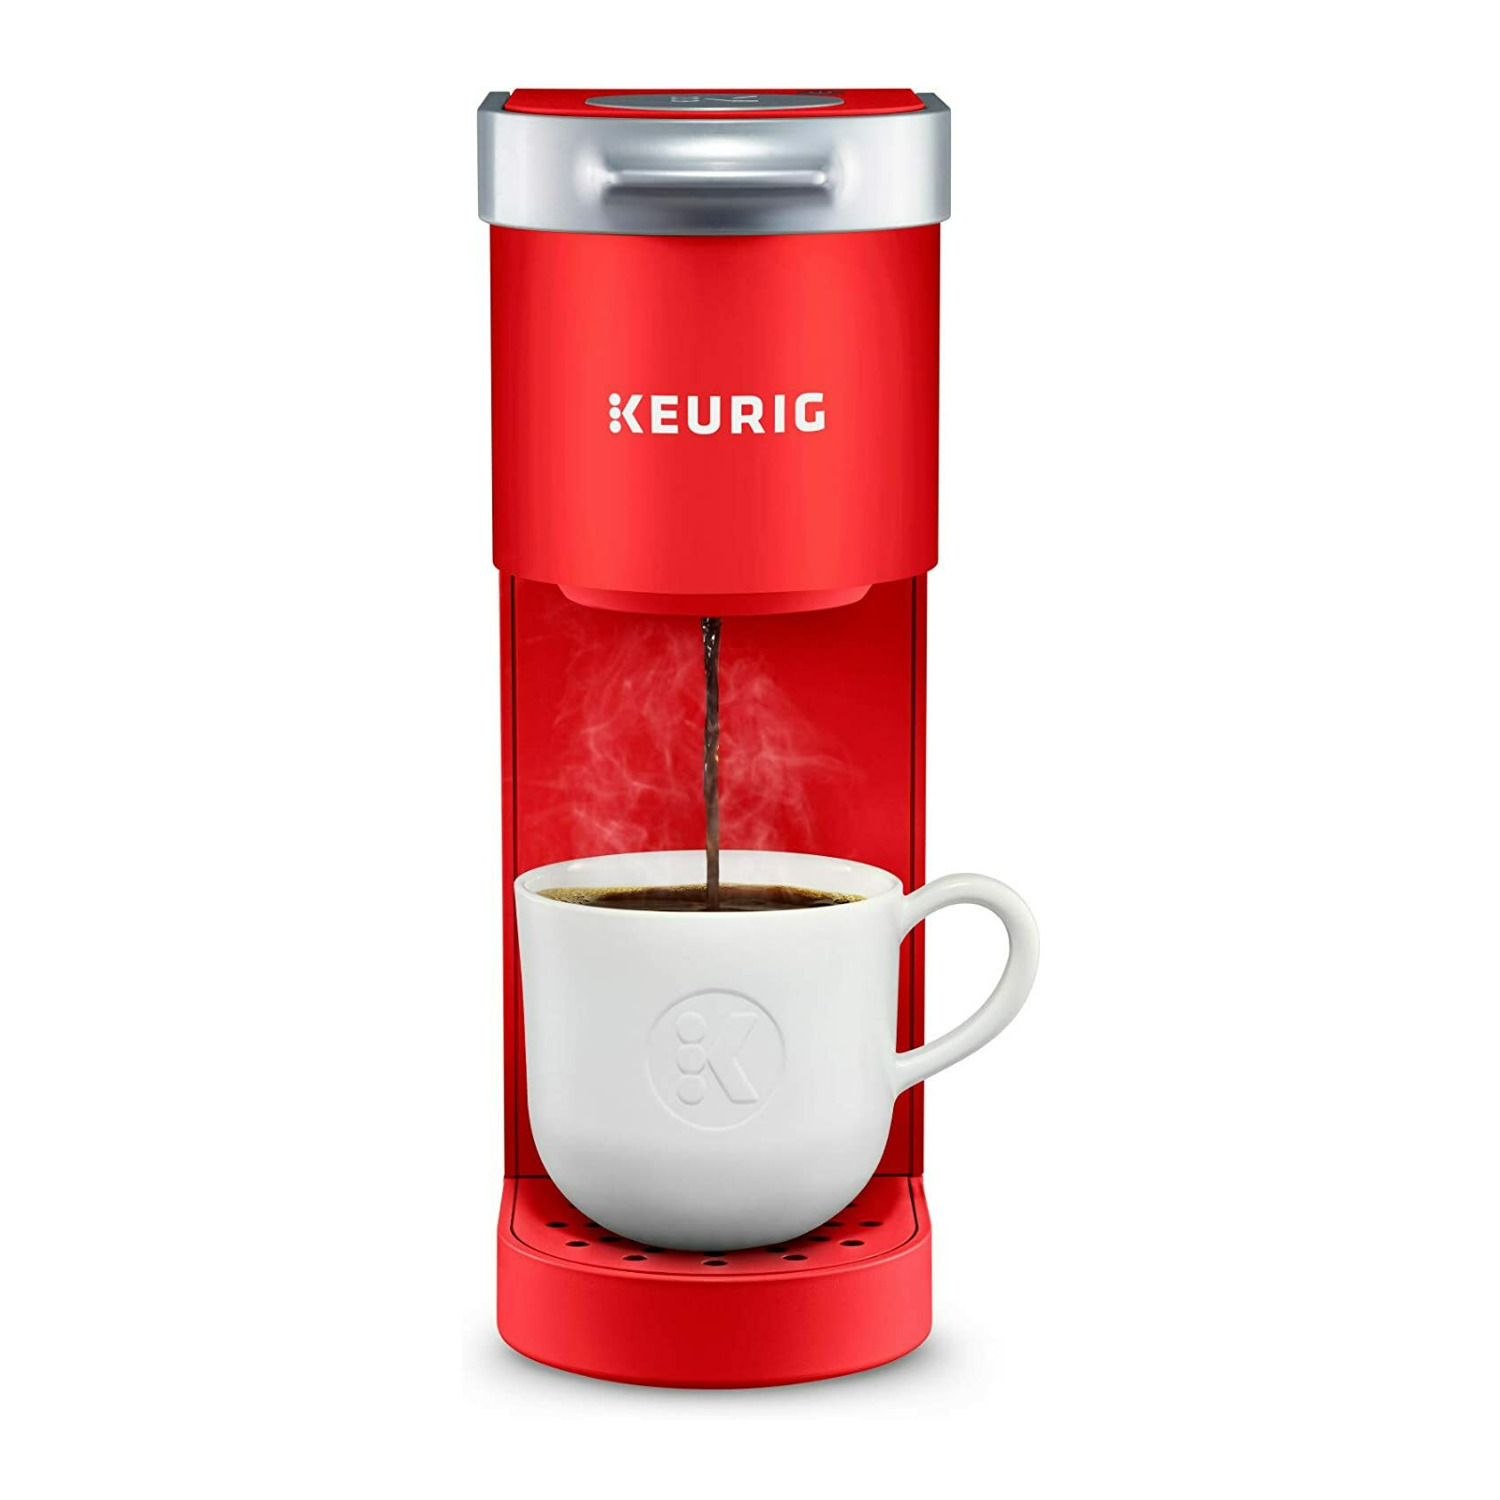 Keurig K-Mini Coffee Maker, Single Serve K-Cup Pod Coffee Brewer, 6 to 12 oz. Brew Sizes, Poppy Red